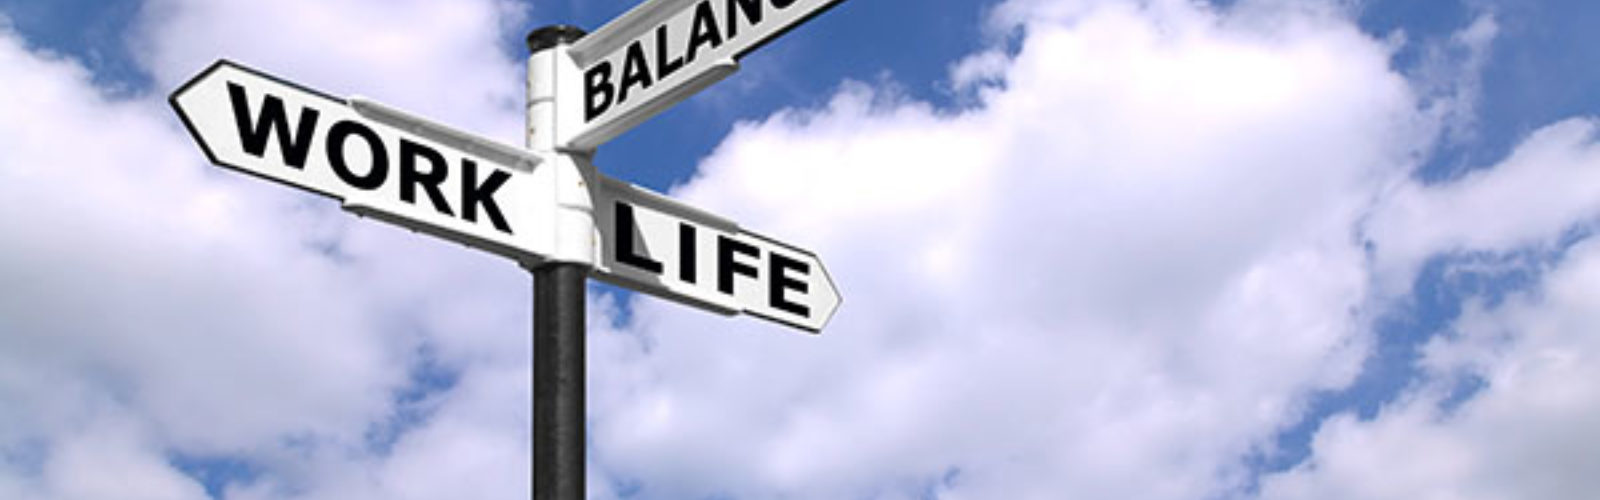 Work life balance signpost (bs3064491)_web.jpg 1